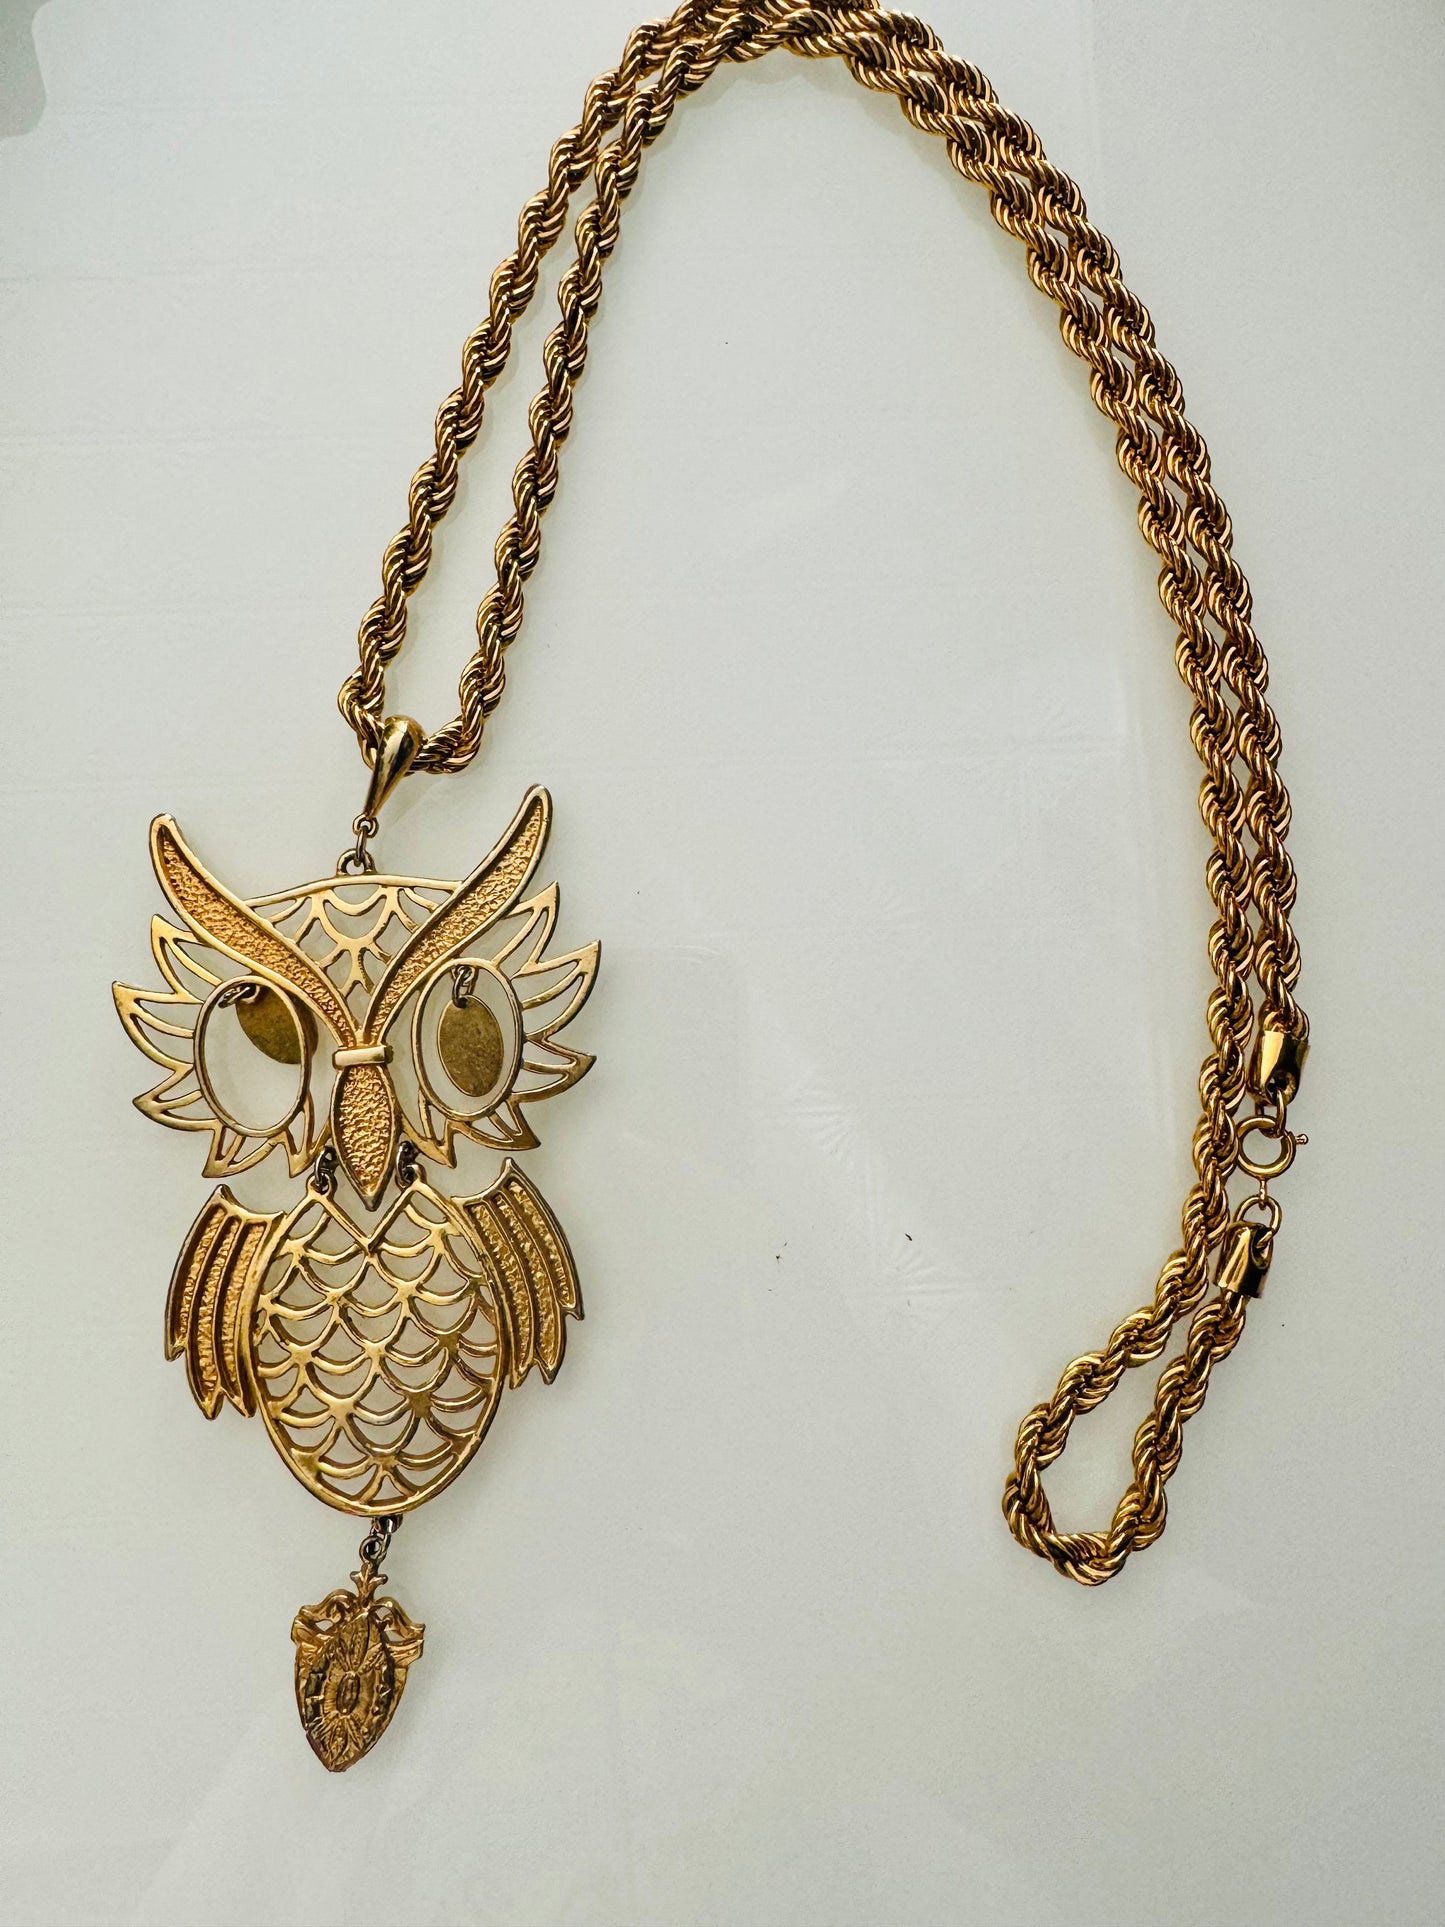 Fabulous Jumbo Wise Owl Gold tone pendant with green eyes